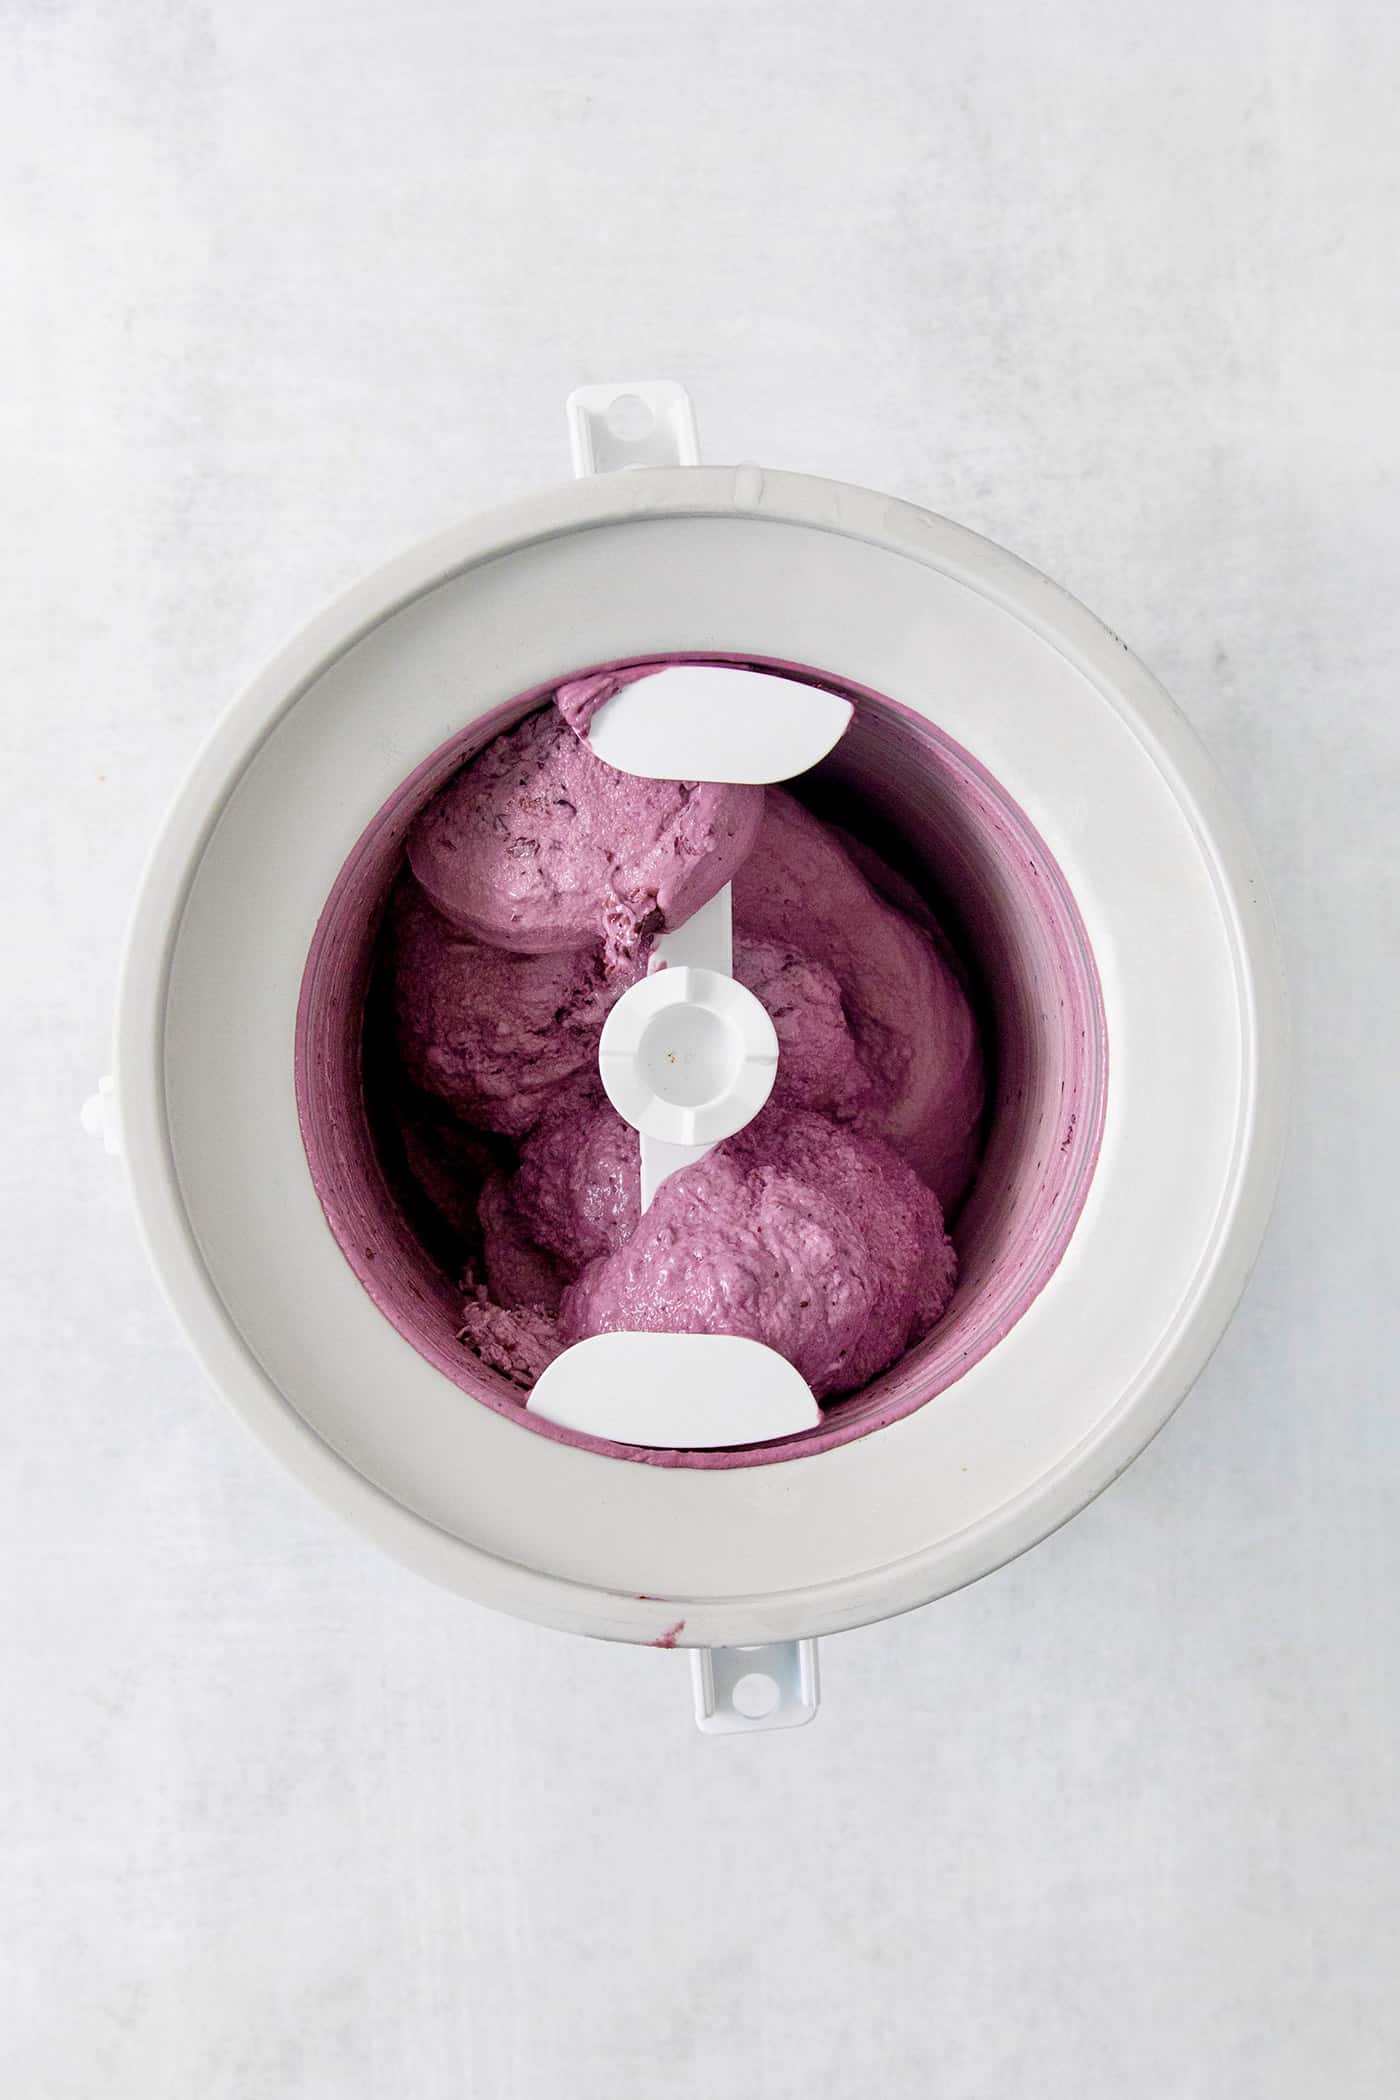 Blueberry ice cream cream churns in an ice cream maker.